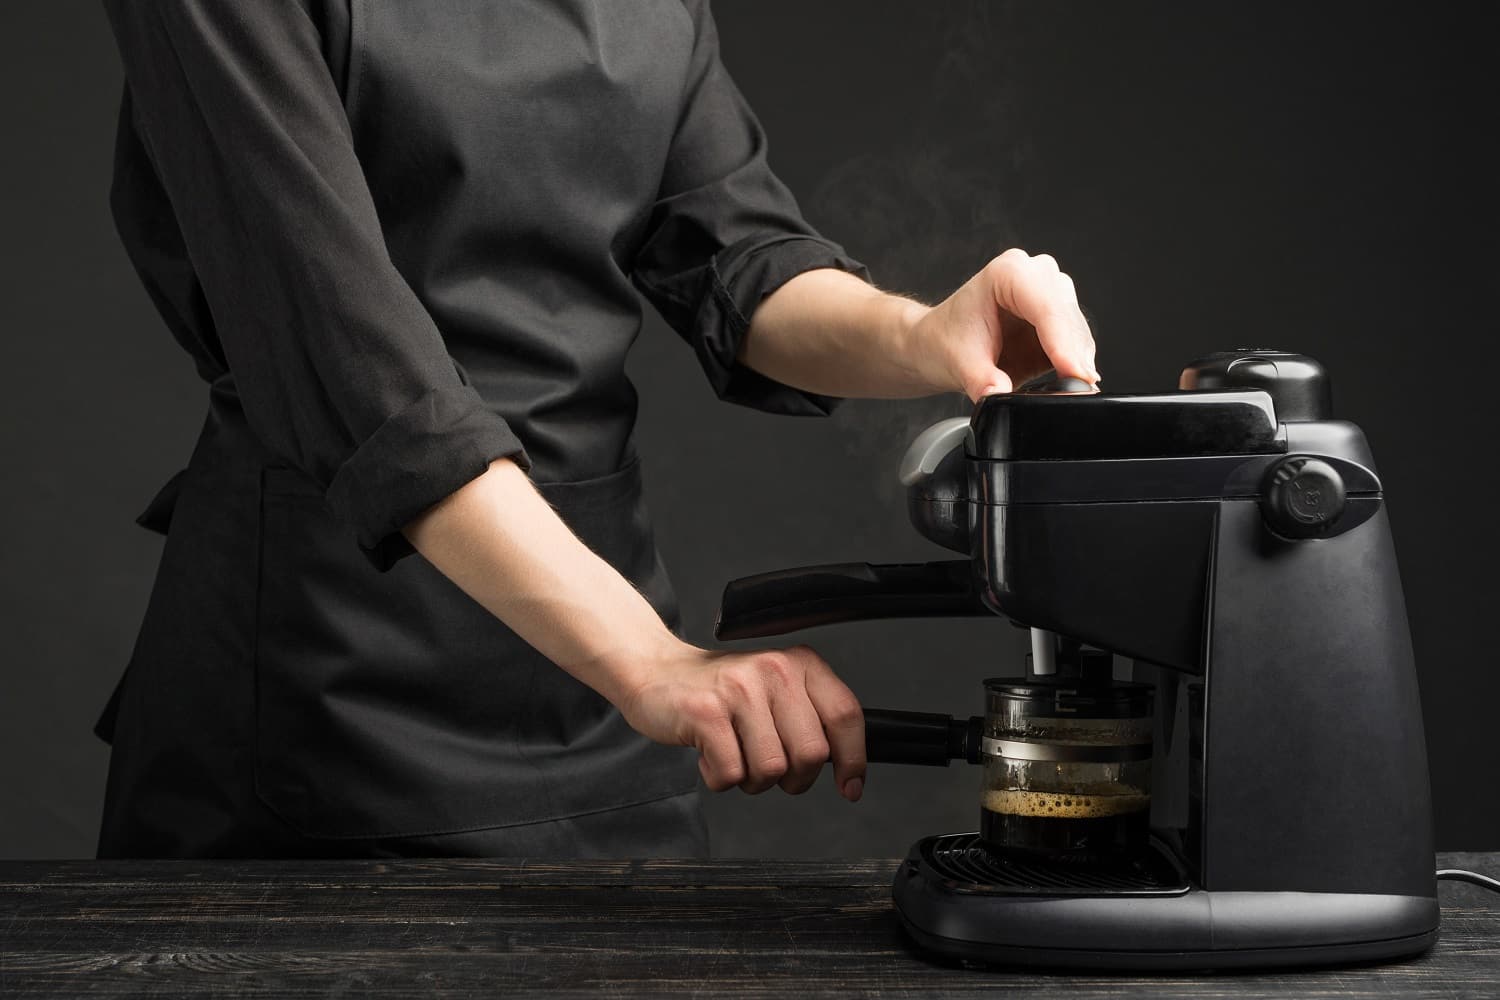 Professional barist with a coffee machine, brews coffee. Against a dark background